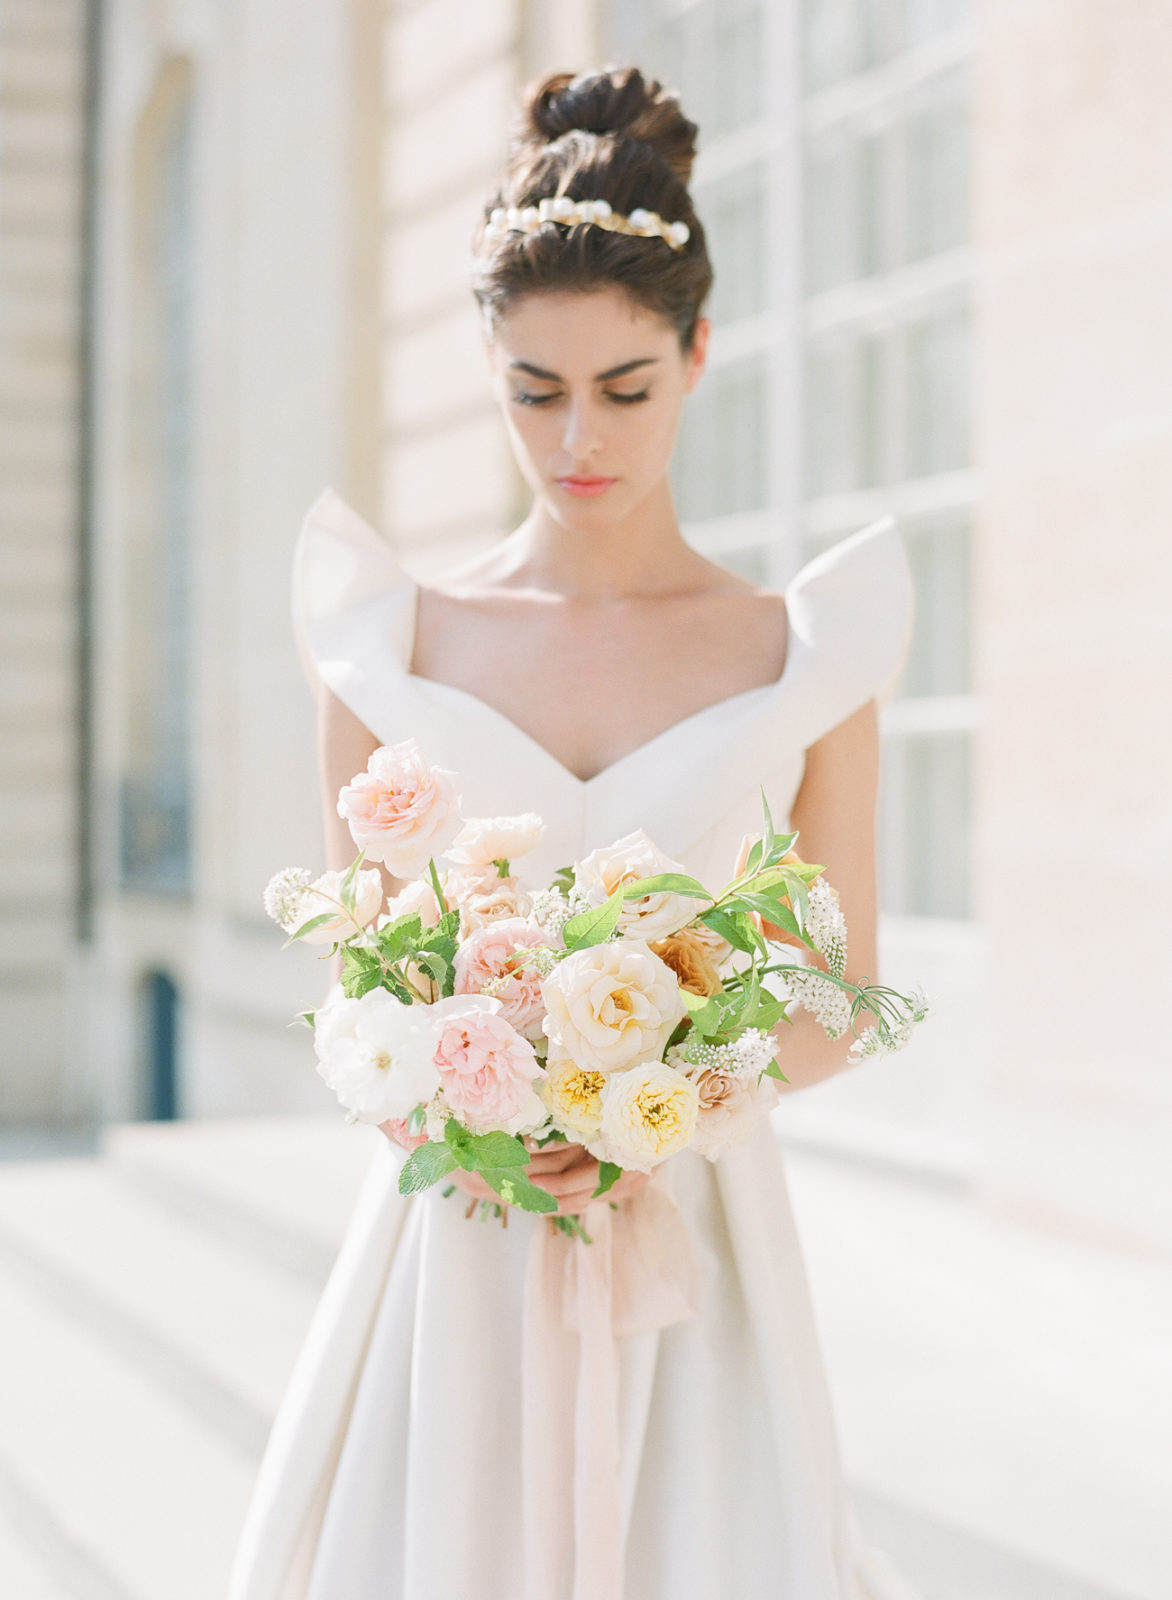 Musee Rodin Wedding Photographer | Paris Garden Wedding Photography | Paris Film Photographer | France Wedding Photography | Molly Carr Photography | Lihi Hod Wedding Dress